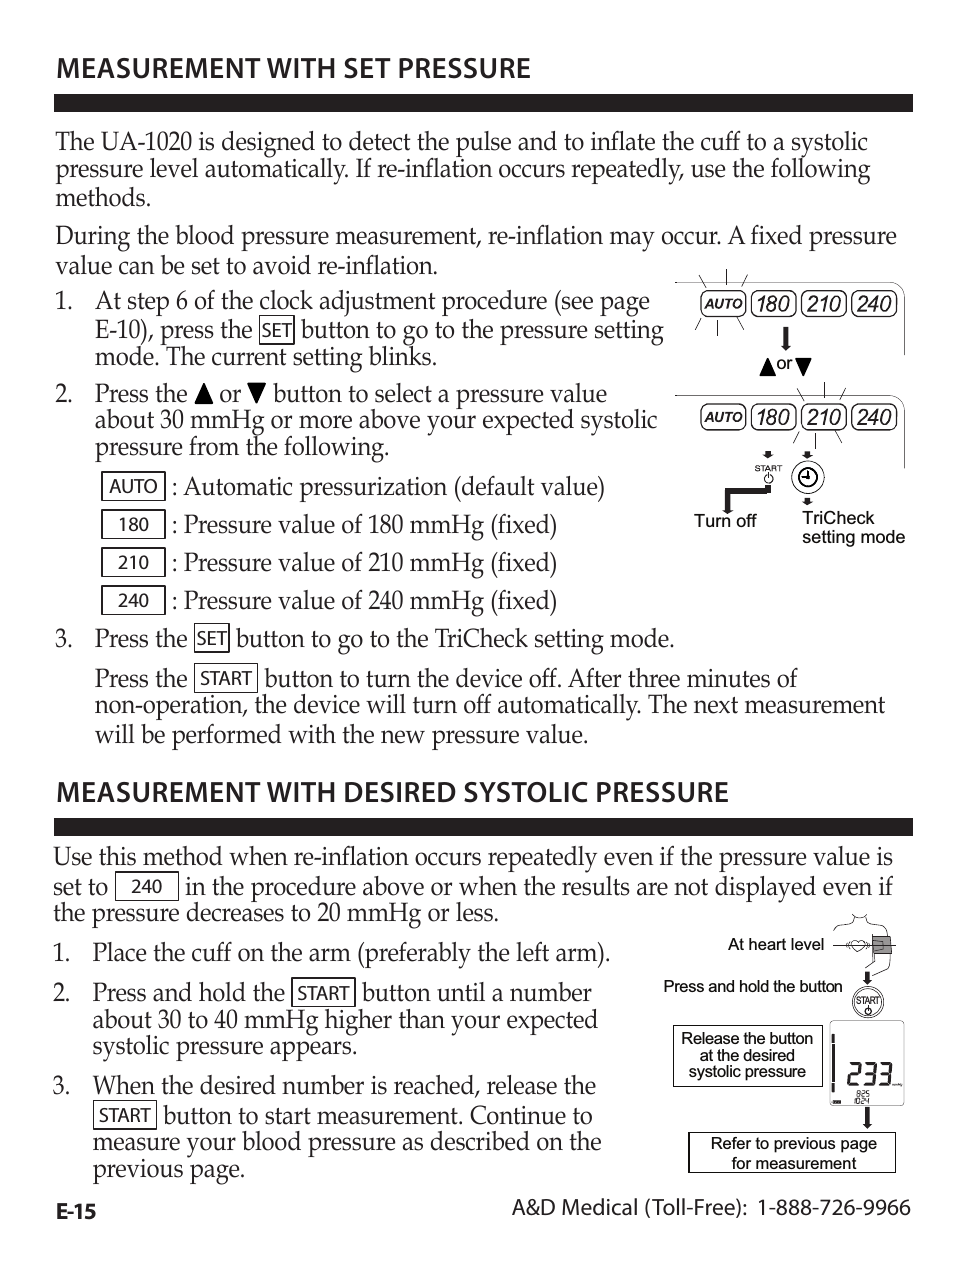 Premier/TriCheck Blood Pressure MOnitor UA-1020 (Page 16)